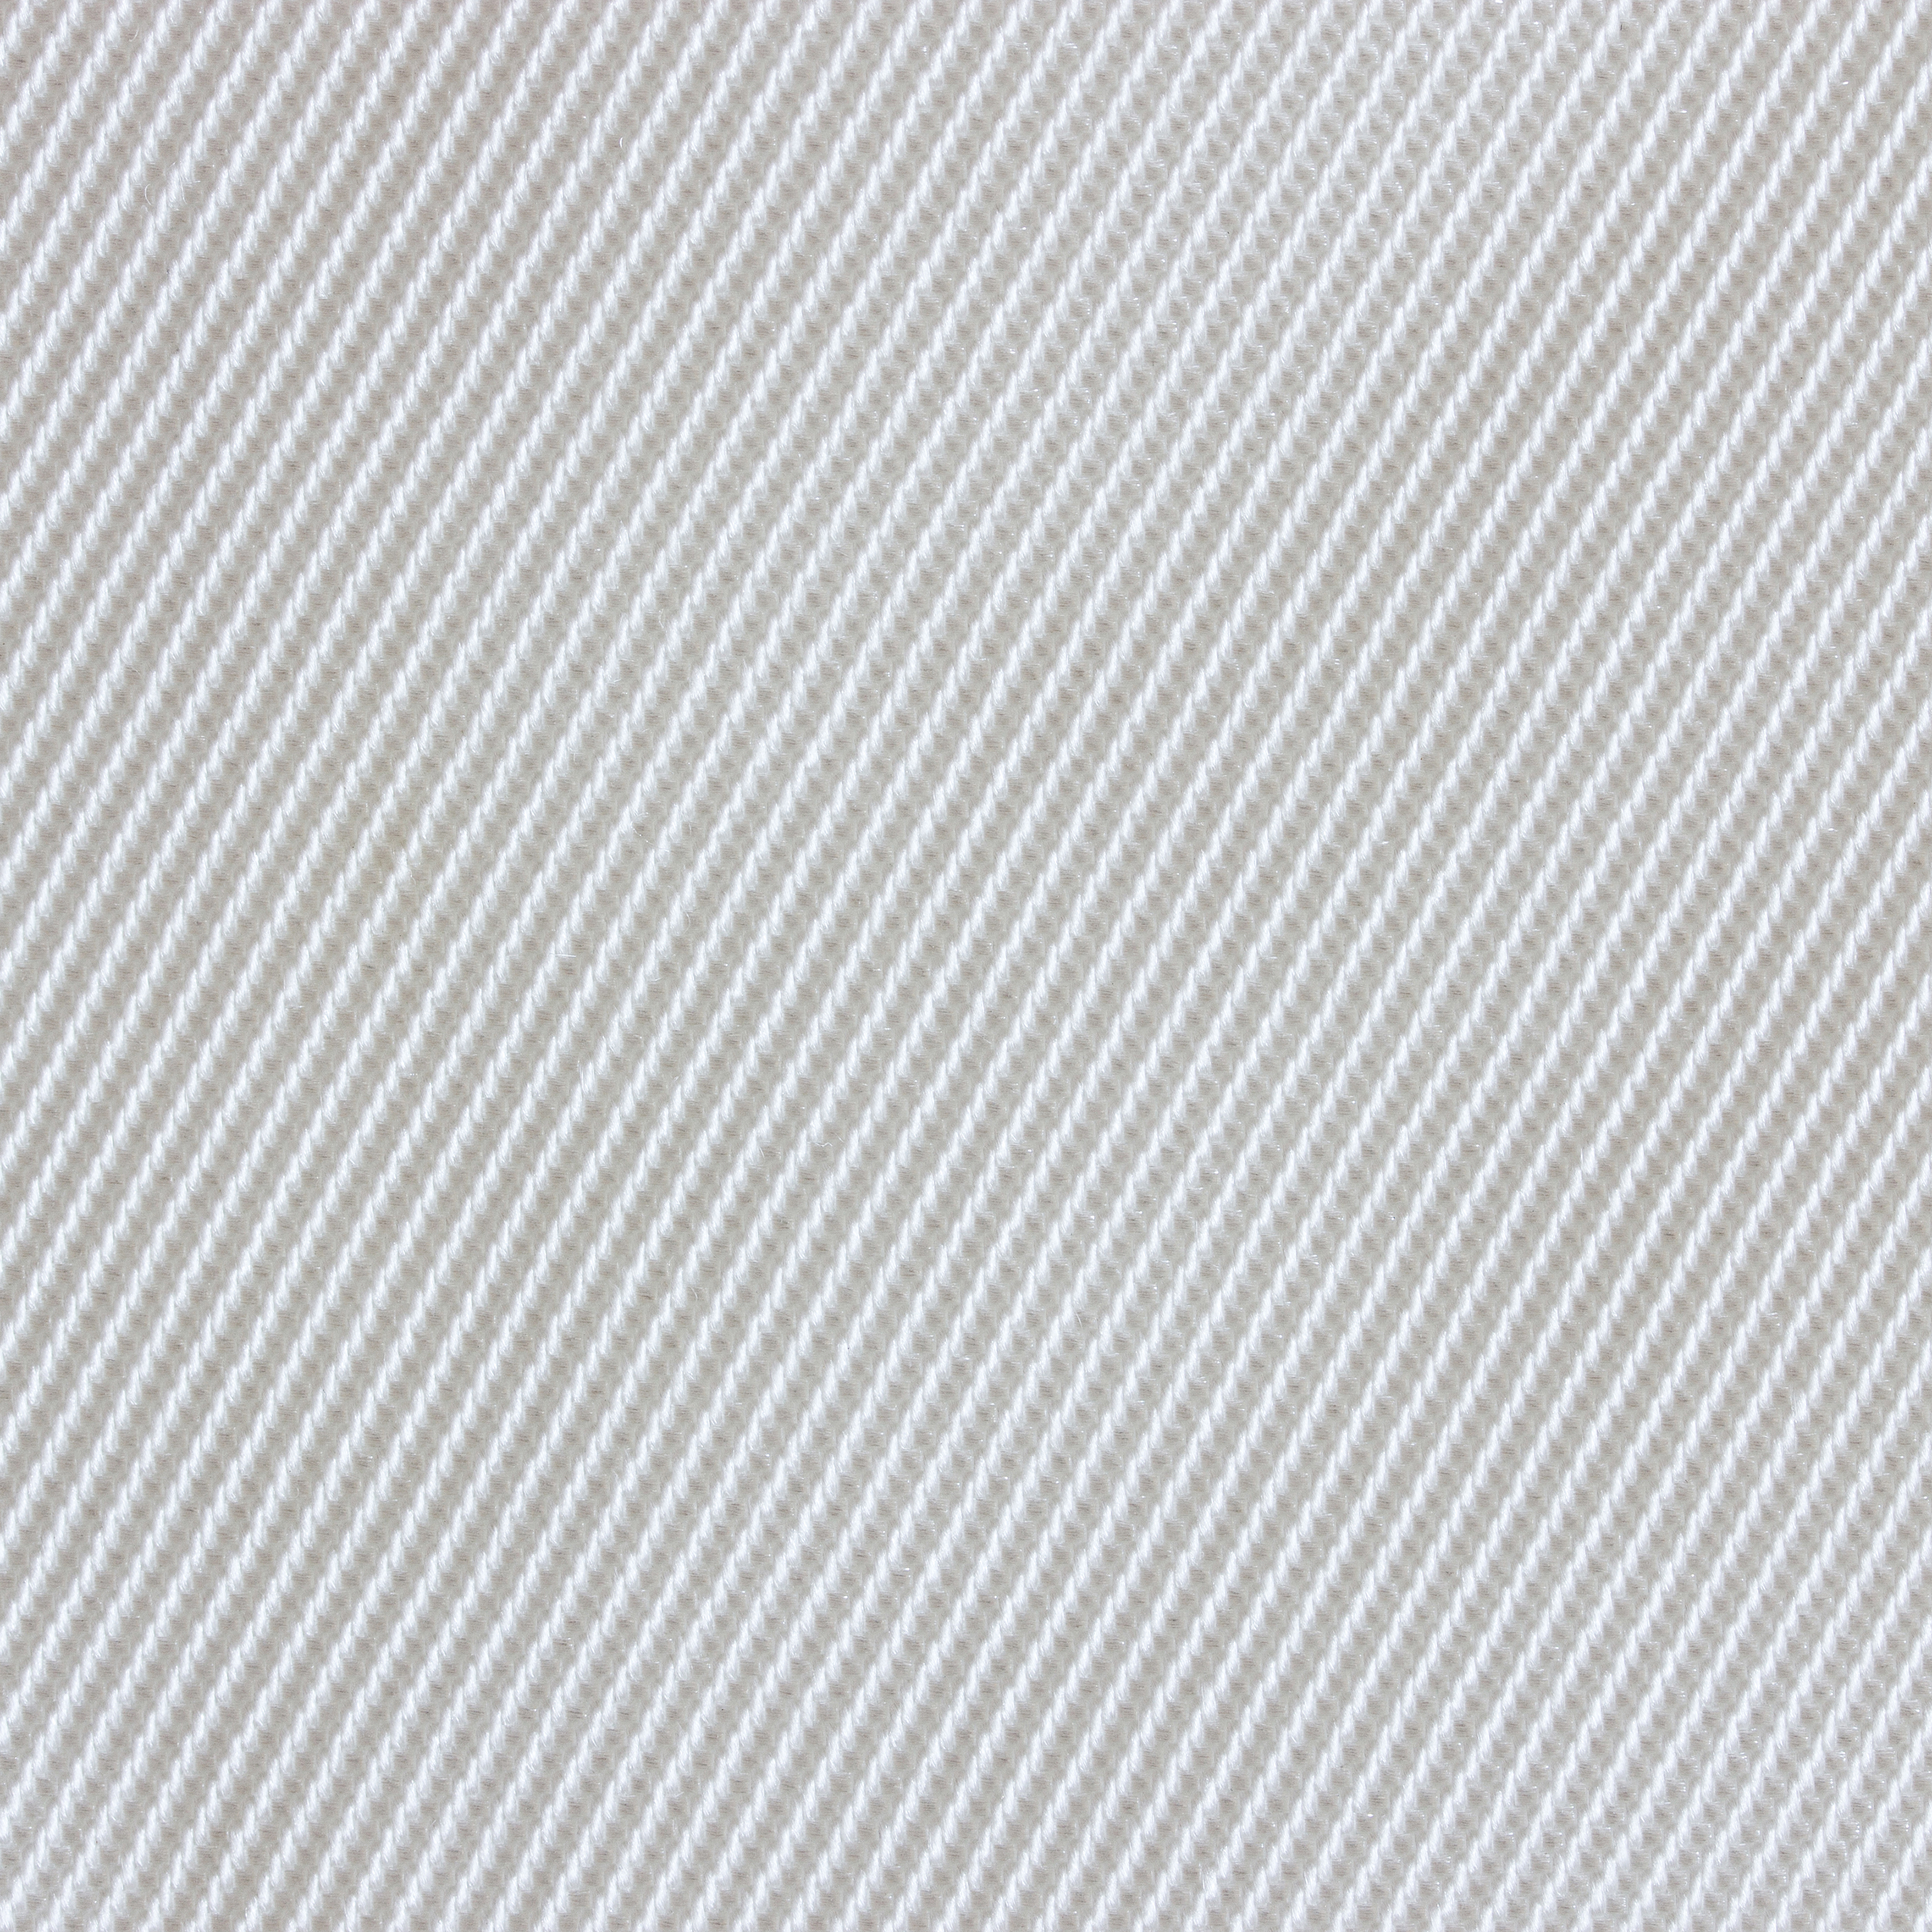 White striped fabric texture - Schott Textiles, Inc.